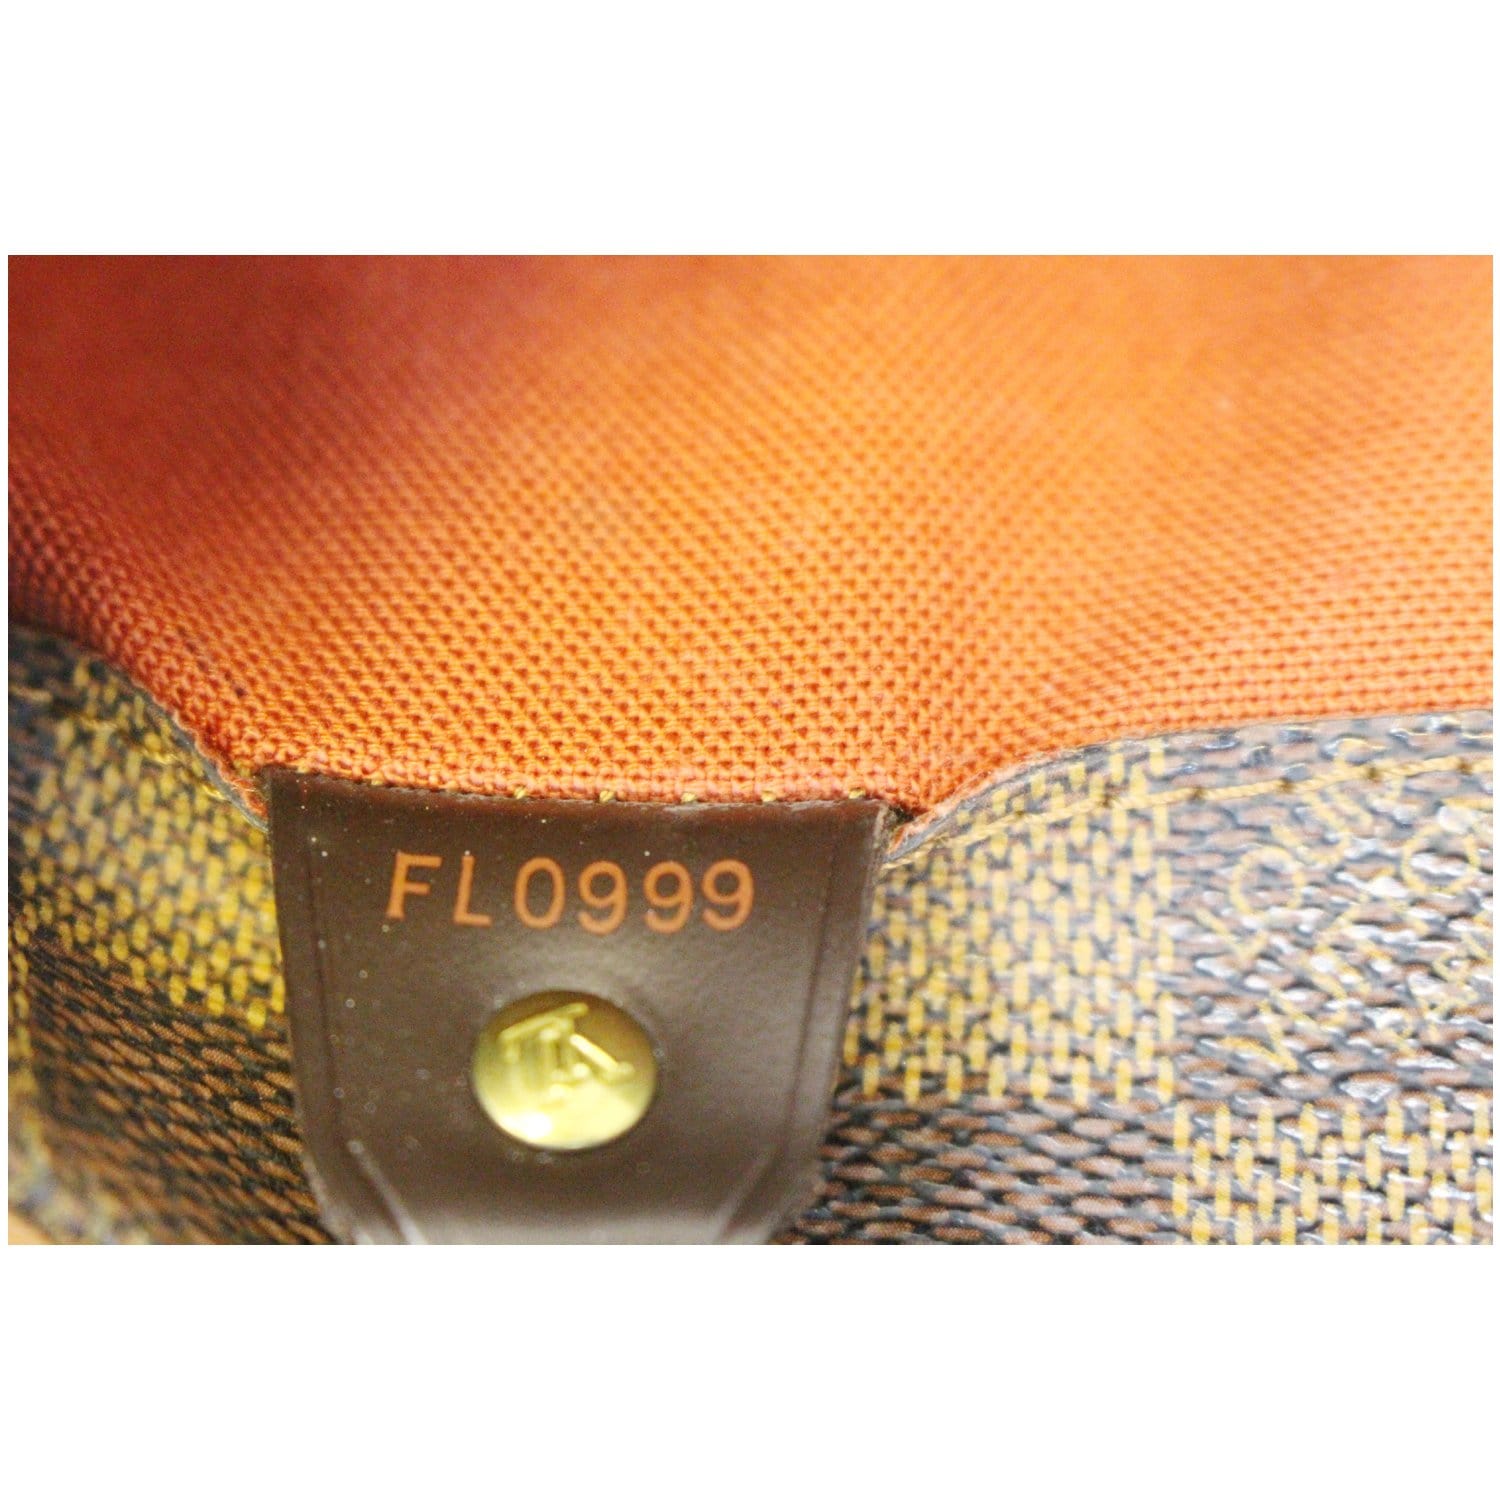 Buy [Used] LOUIS VUITTON Parioli PM Shoulder Bag Tote Bag Damier Ebene  N51123 from Japan - Buy authentic Plus exclusive items from Japan